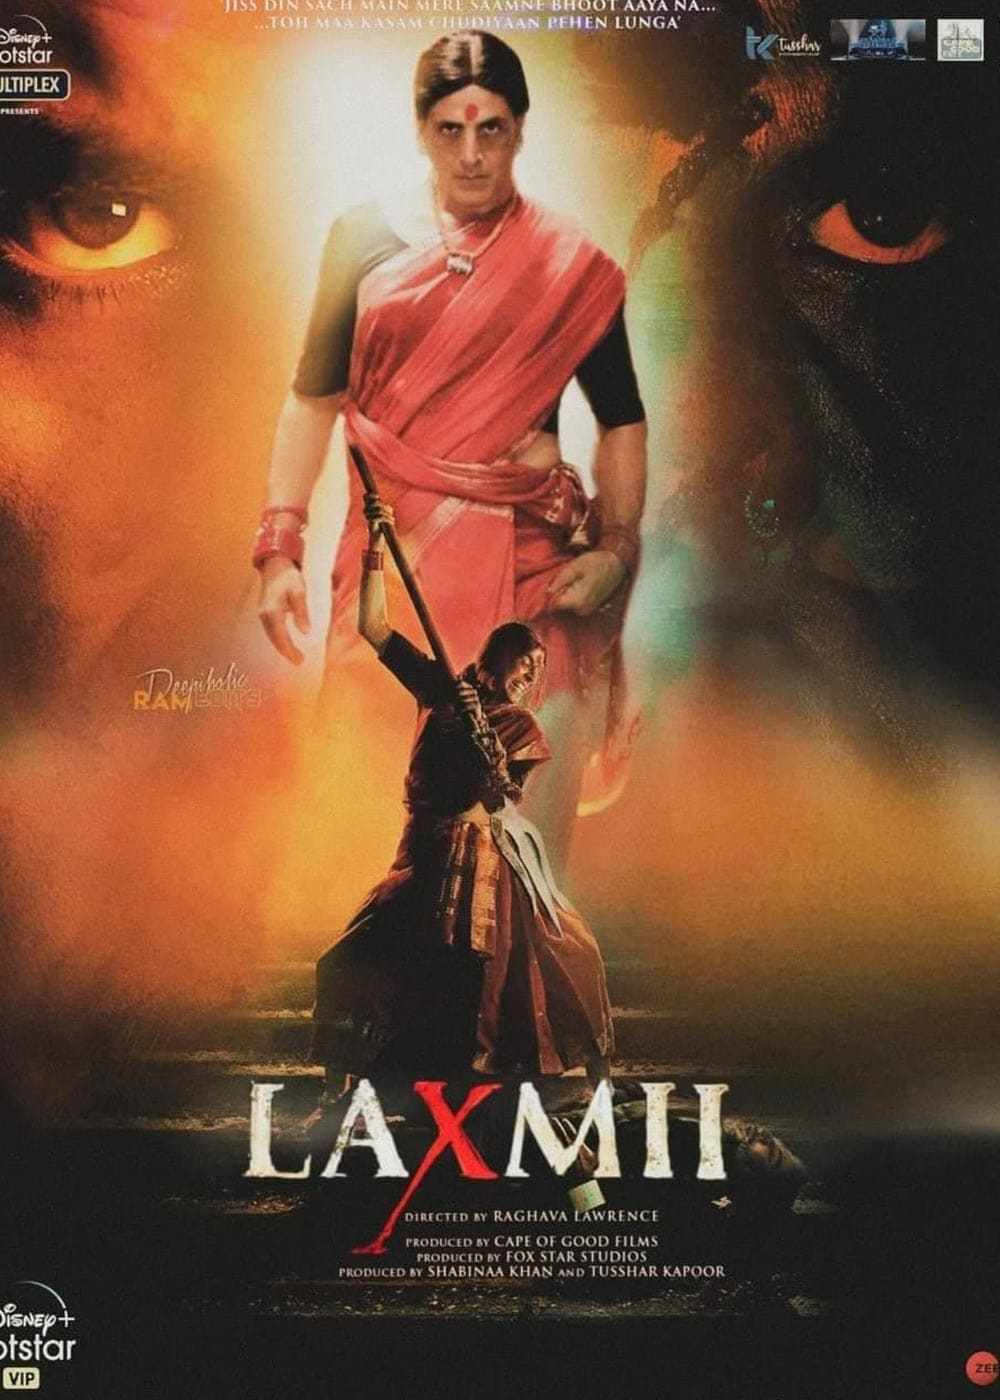 Laxmii Movie 2020 Release Date Review Cast Trailer Watch Online